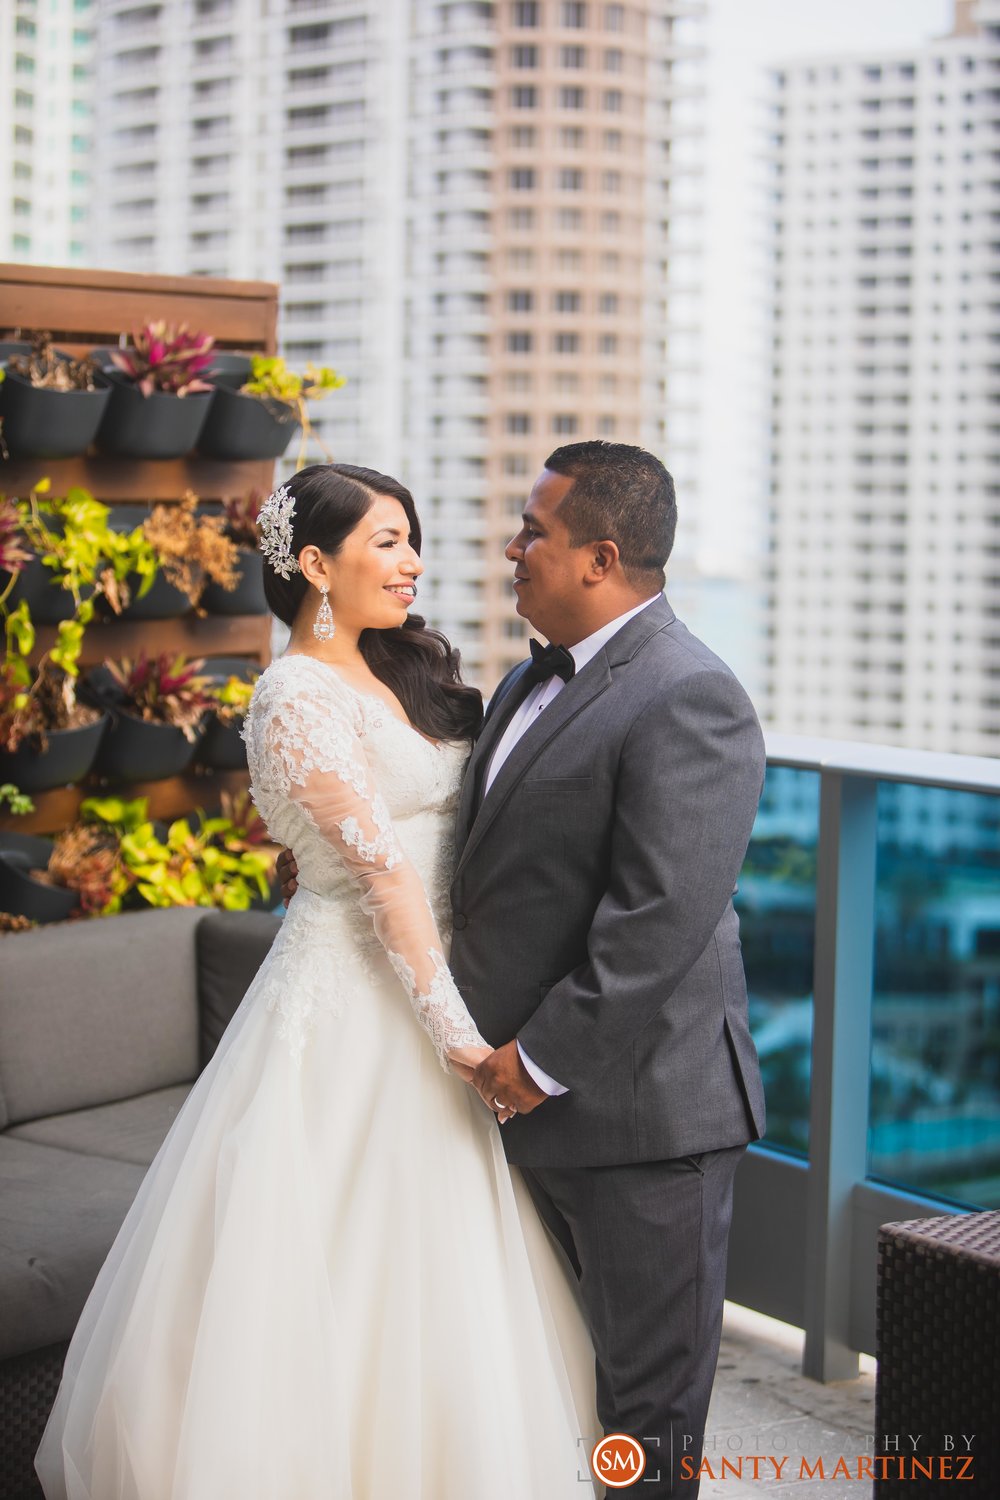 Wedding Epic Hotel Miami - Photography by Santy Martinez-34.jpg